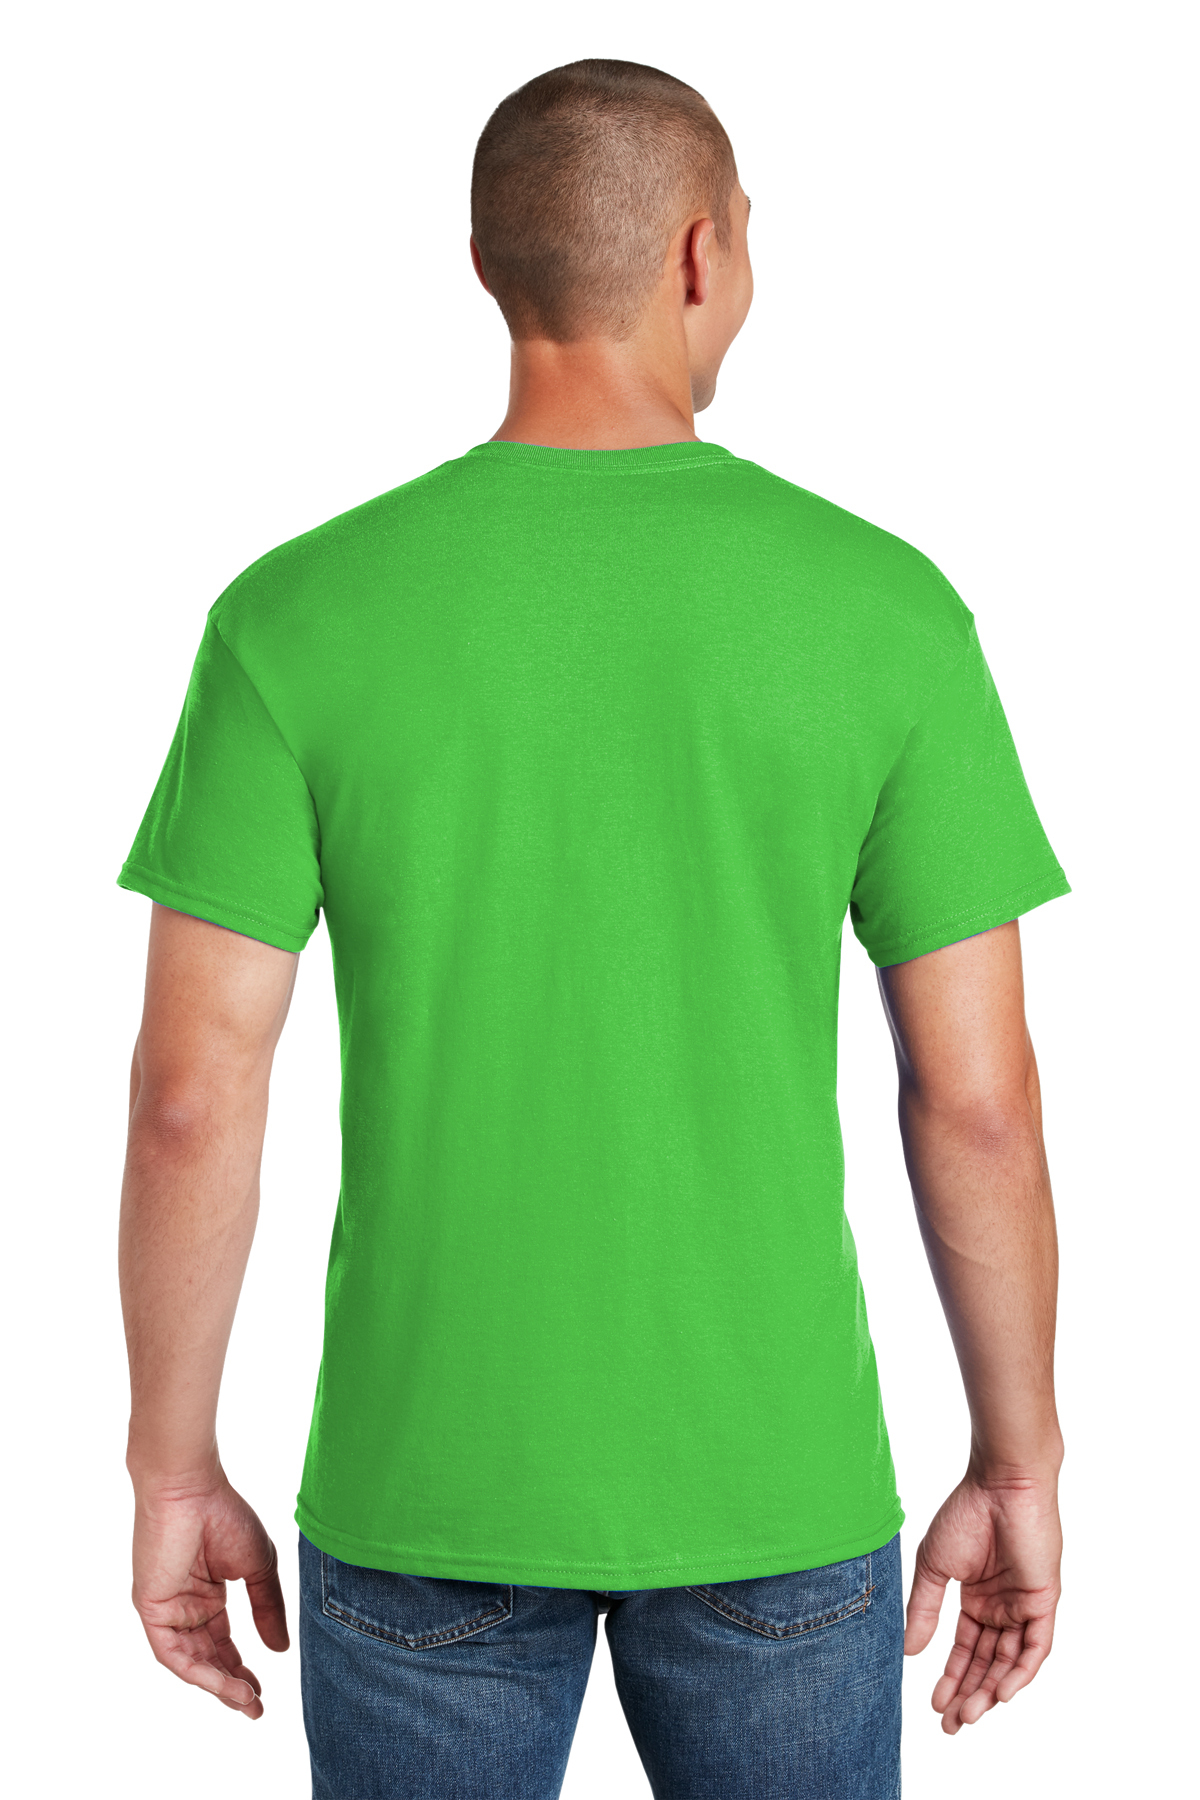 Gildan - DryBlend 50 Cotton/50 Poly T-Shirt | Product | Company Casuals